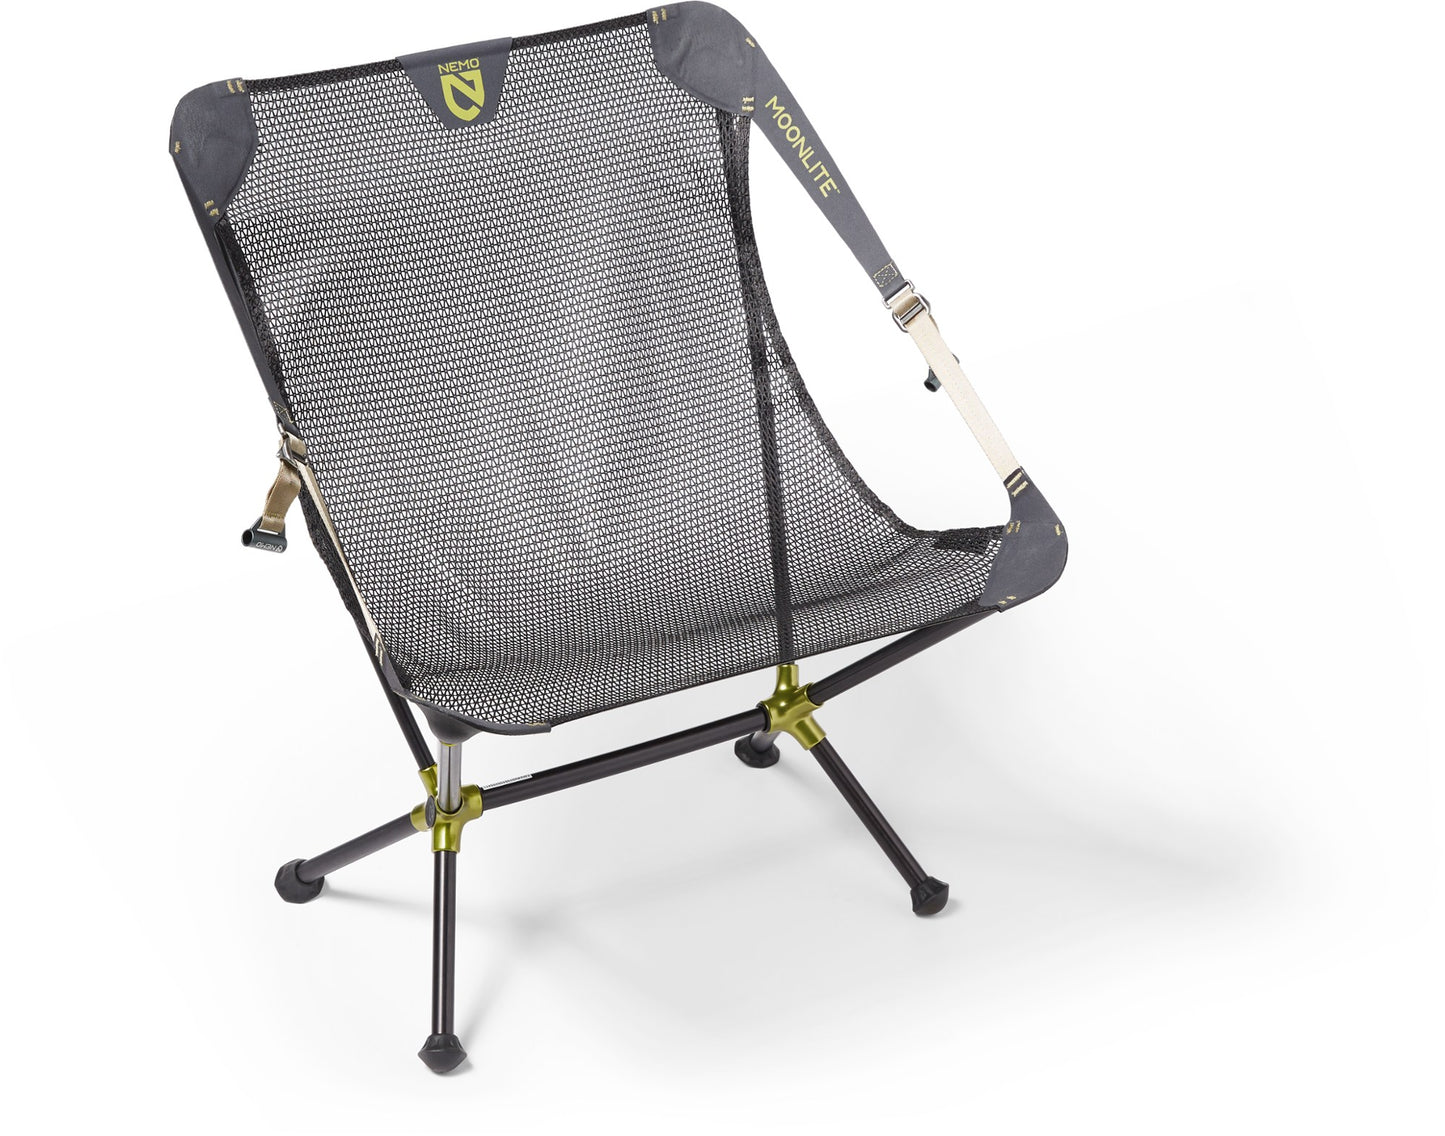 Moonlite™ Reclining Camp Chair - BLKPRL